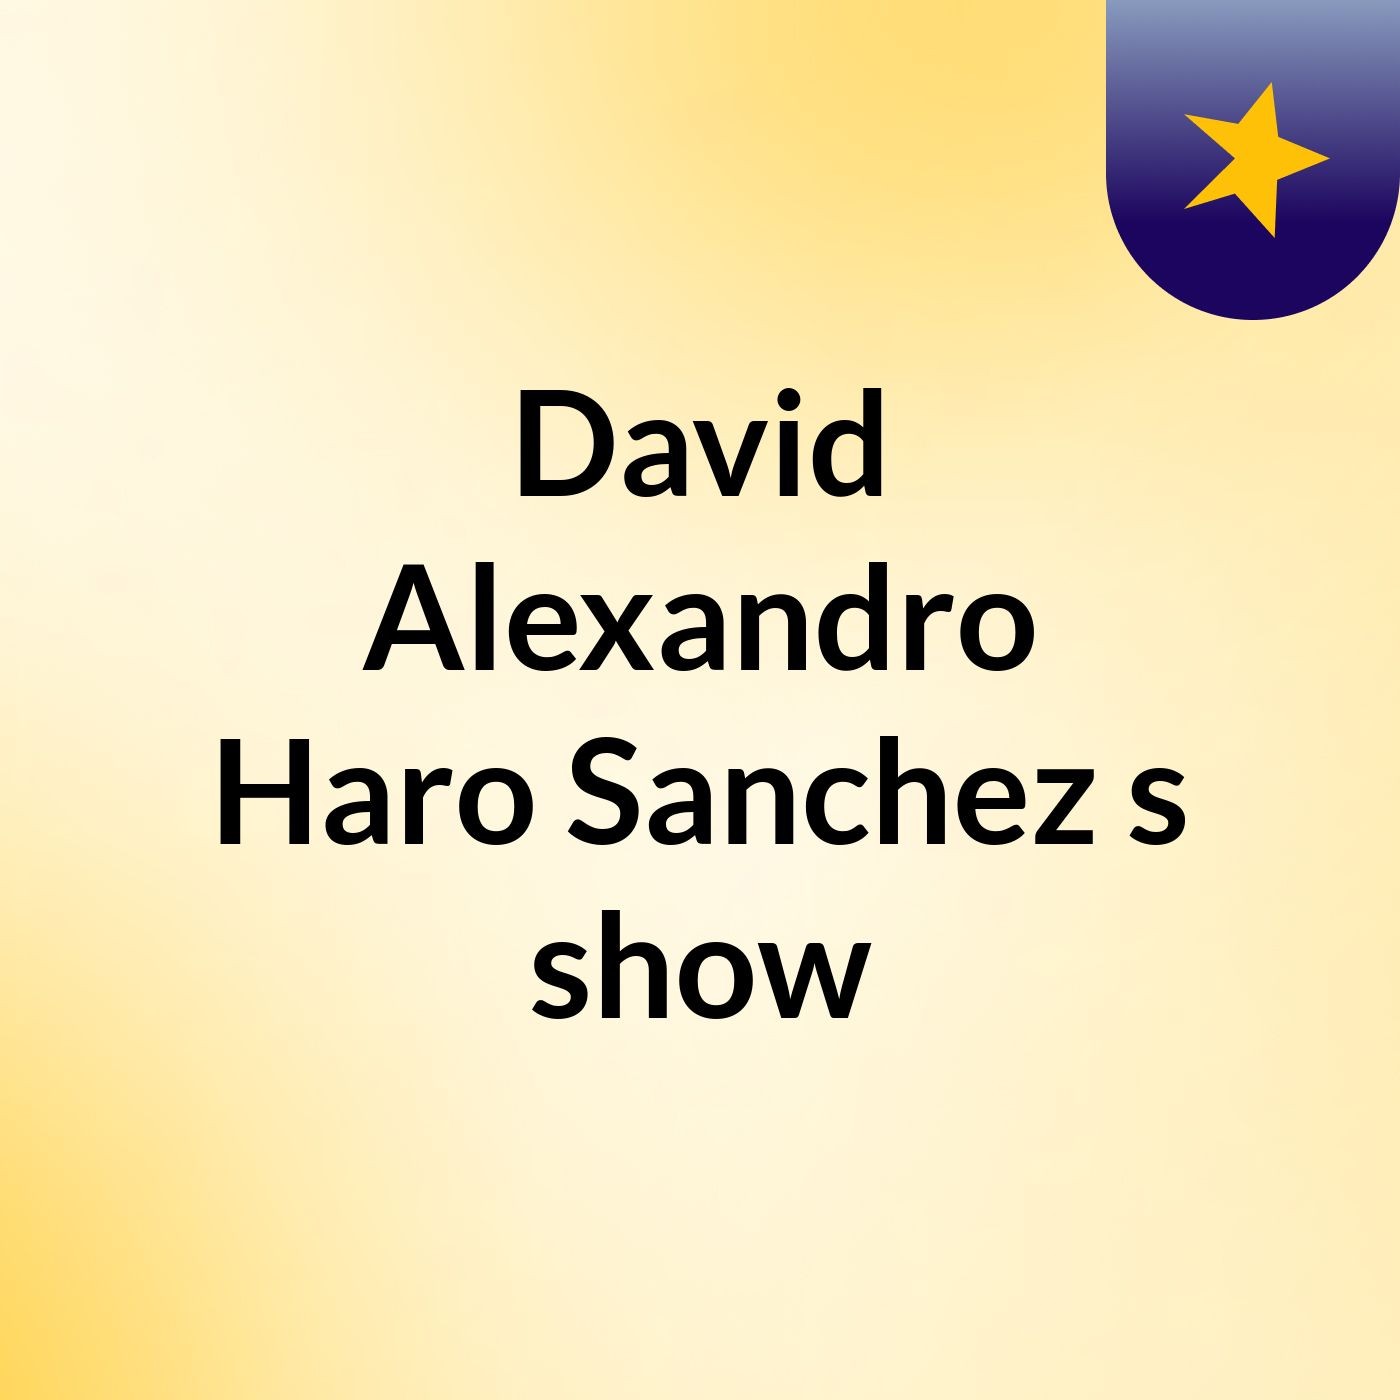 David Alexandro Haro Sanchez's show